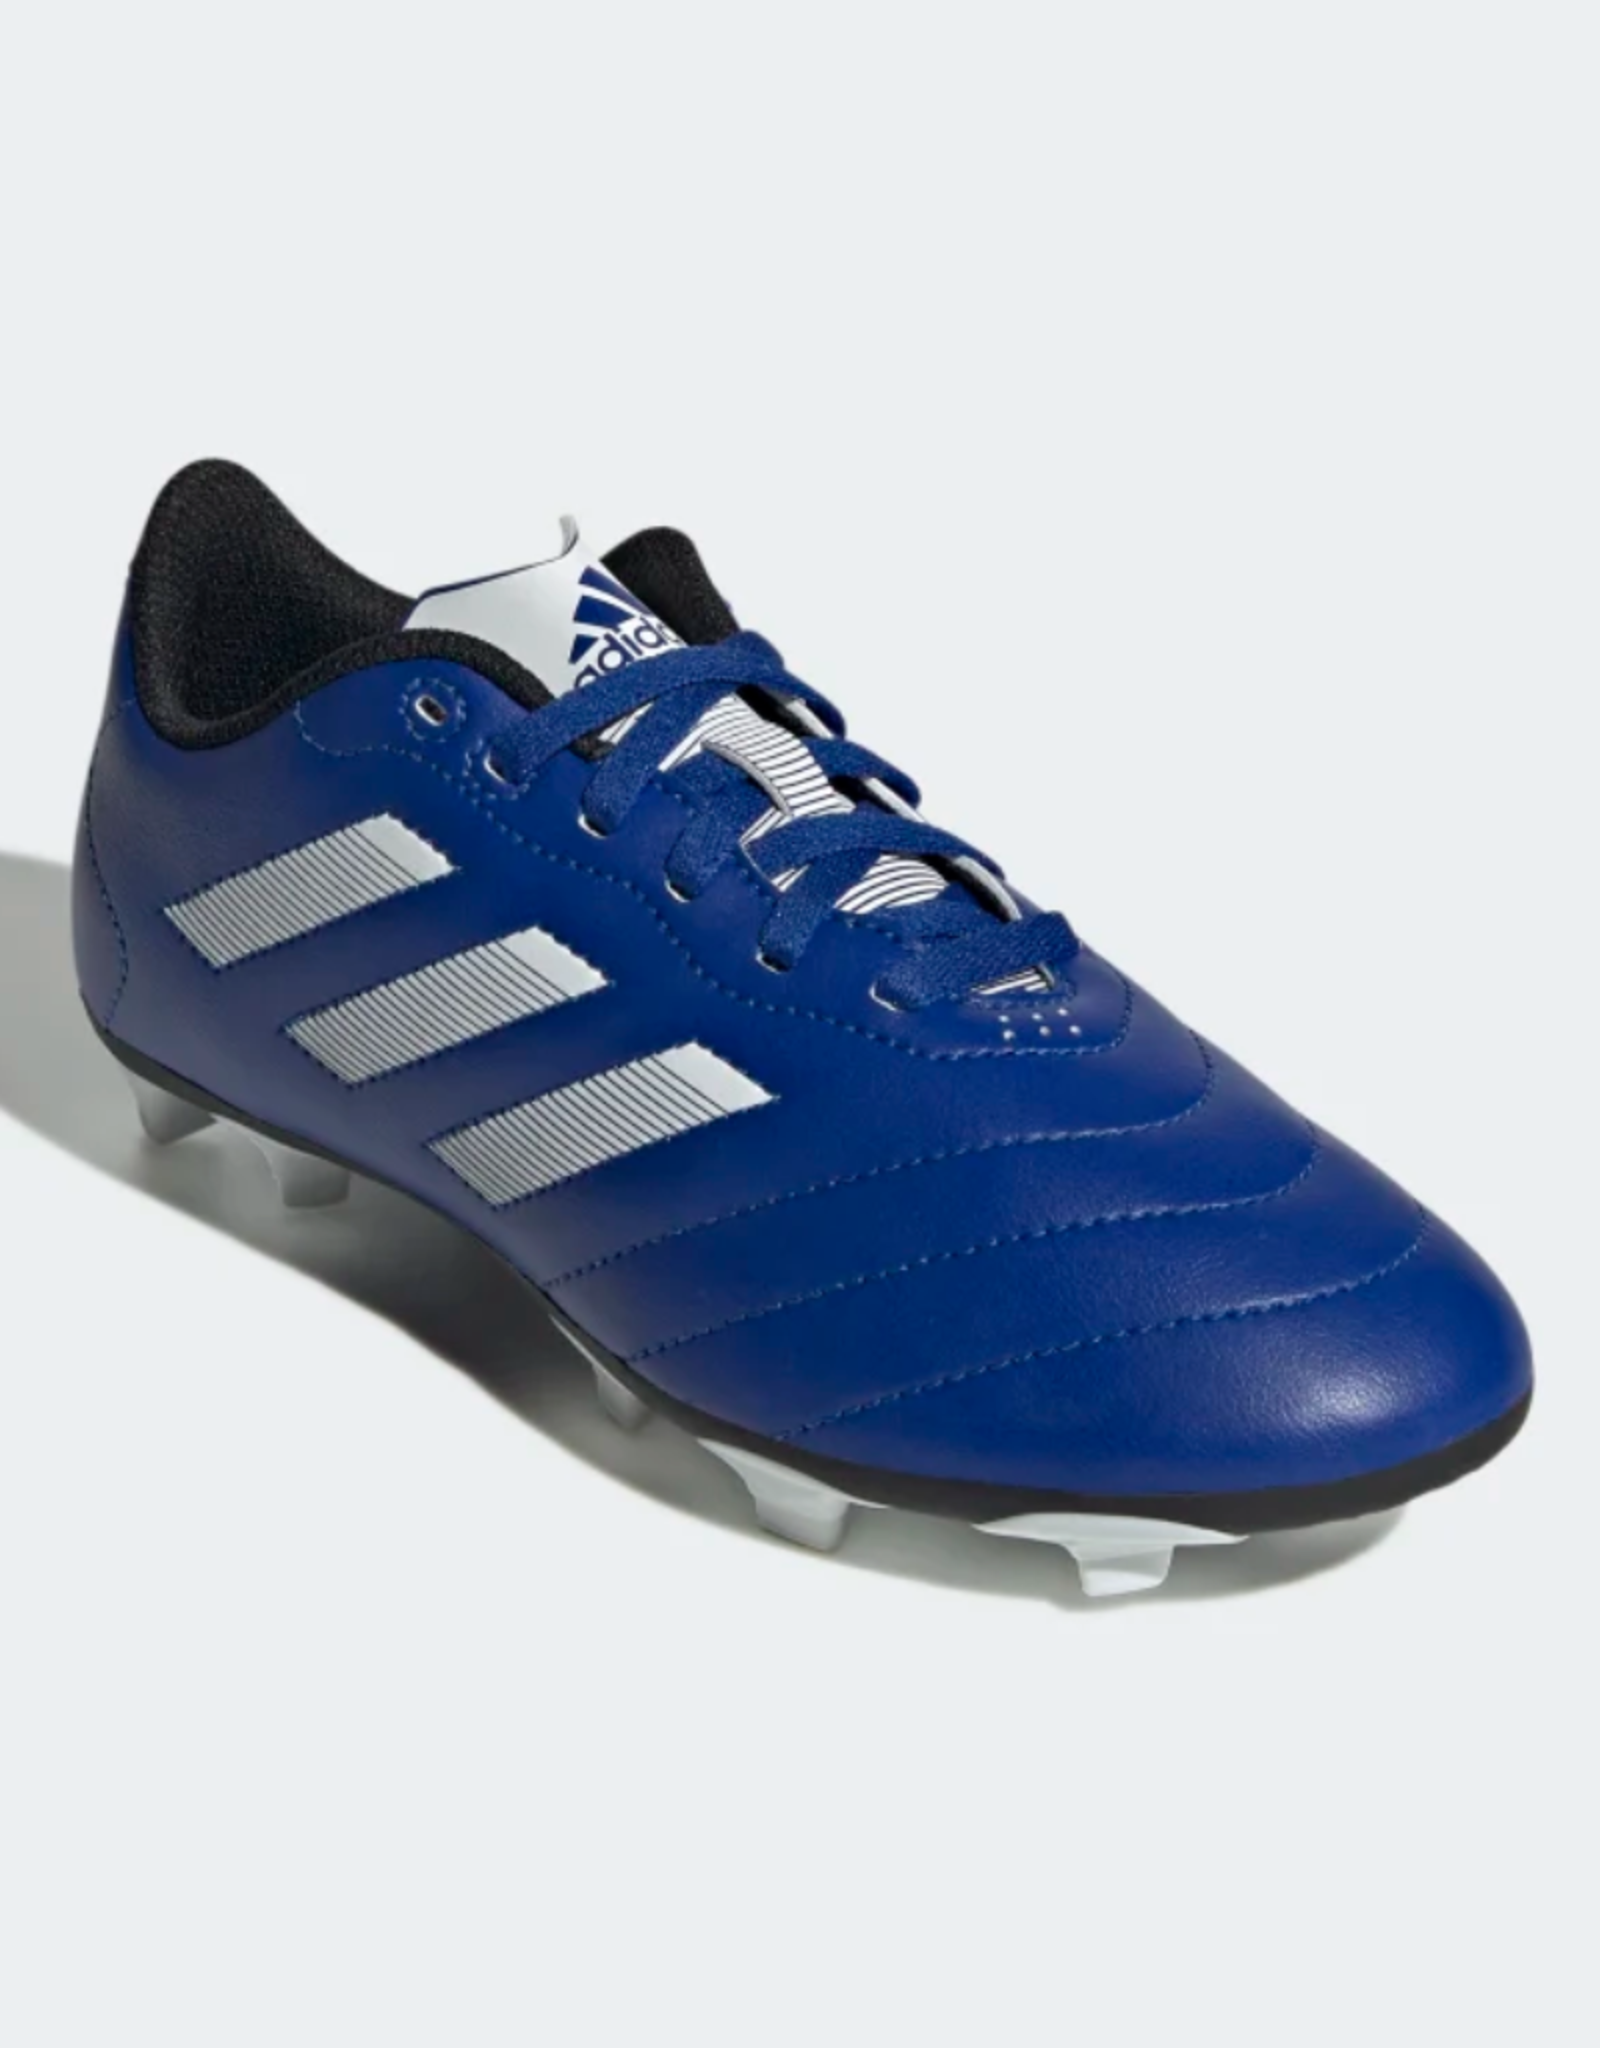 Adidas Adidas Goletto VIII Soccer Cleats Blue